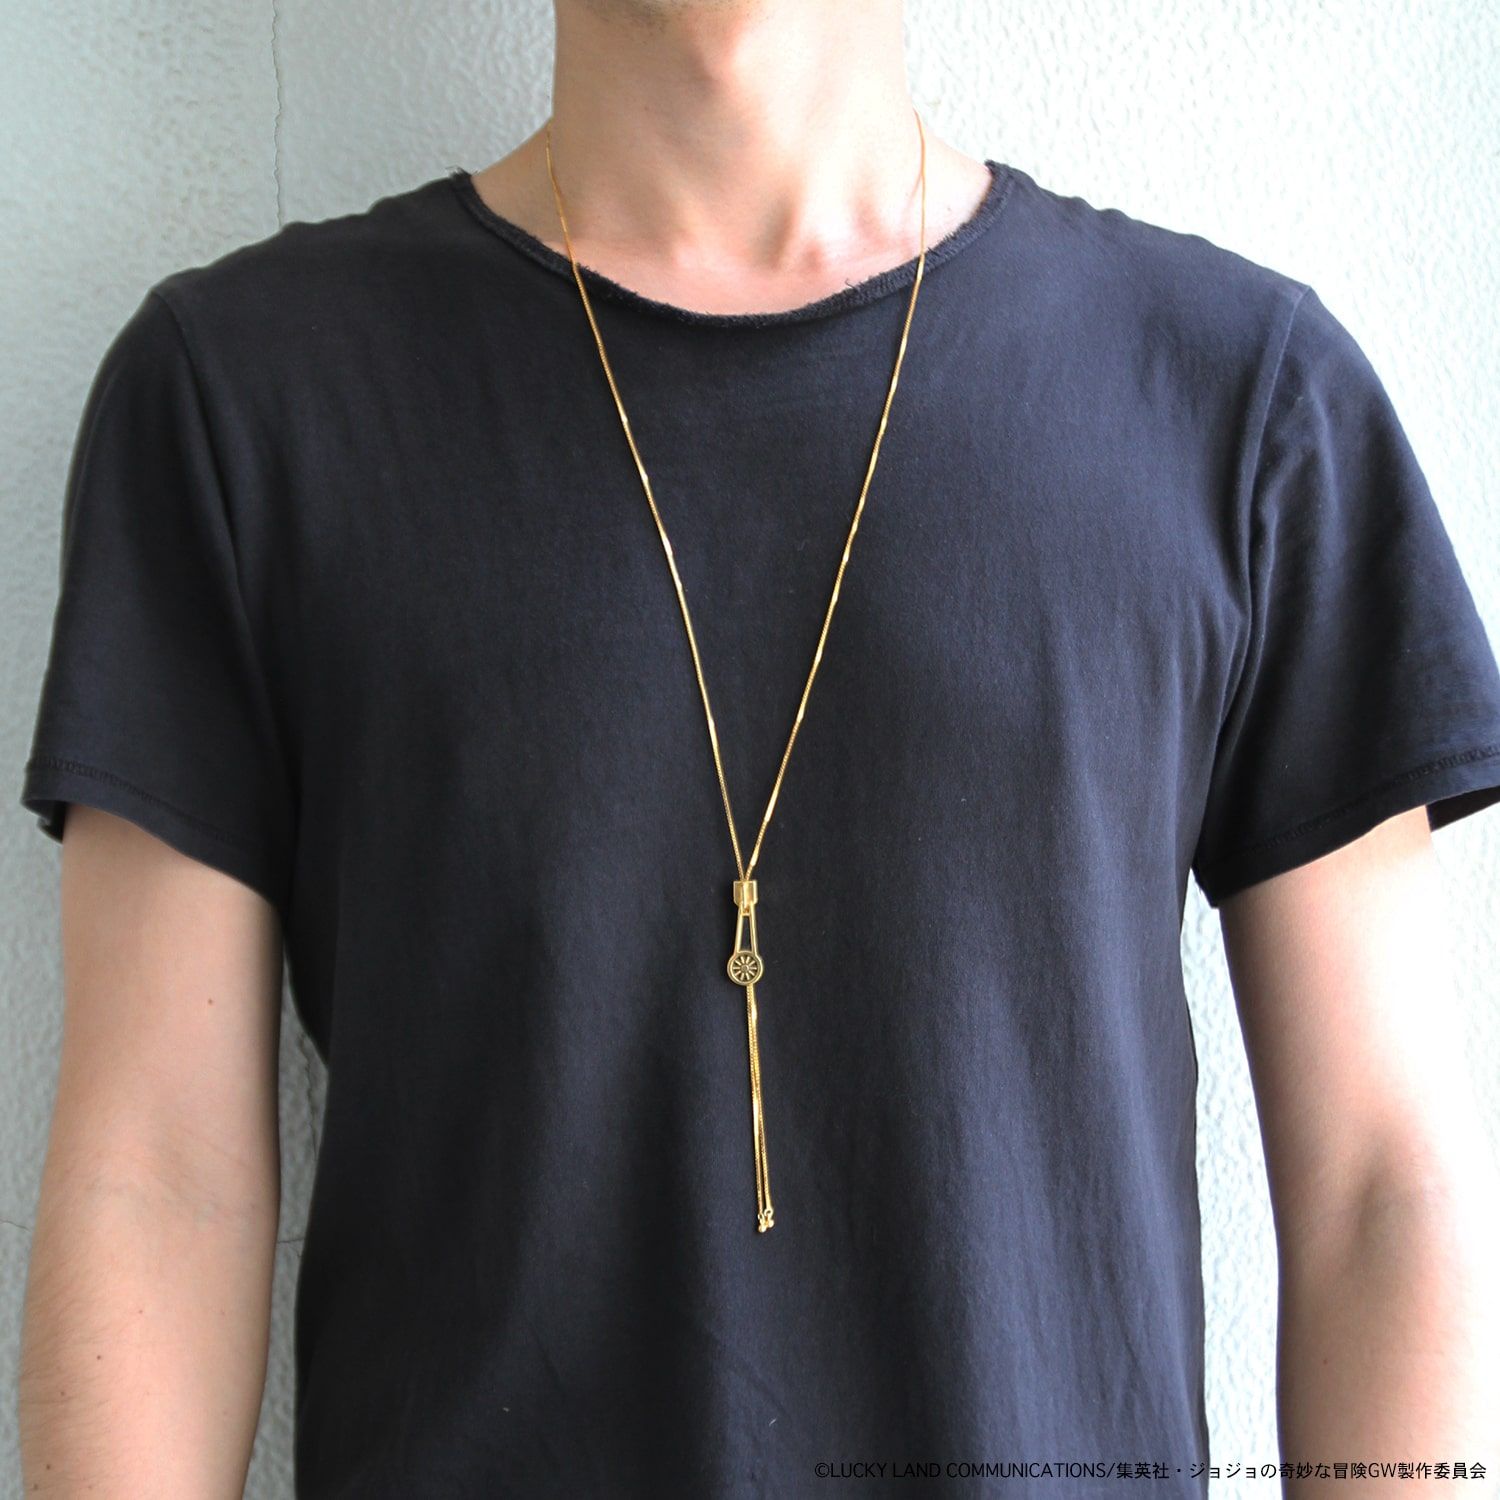 Zipper-shaped Necklace—JoJo's Bizarre Adventure: Golden Wind/JAM HOME MADE Collaboration